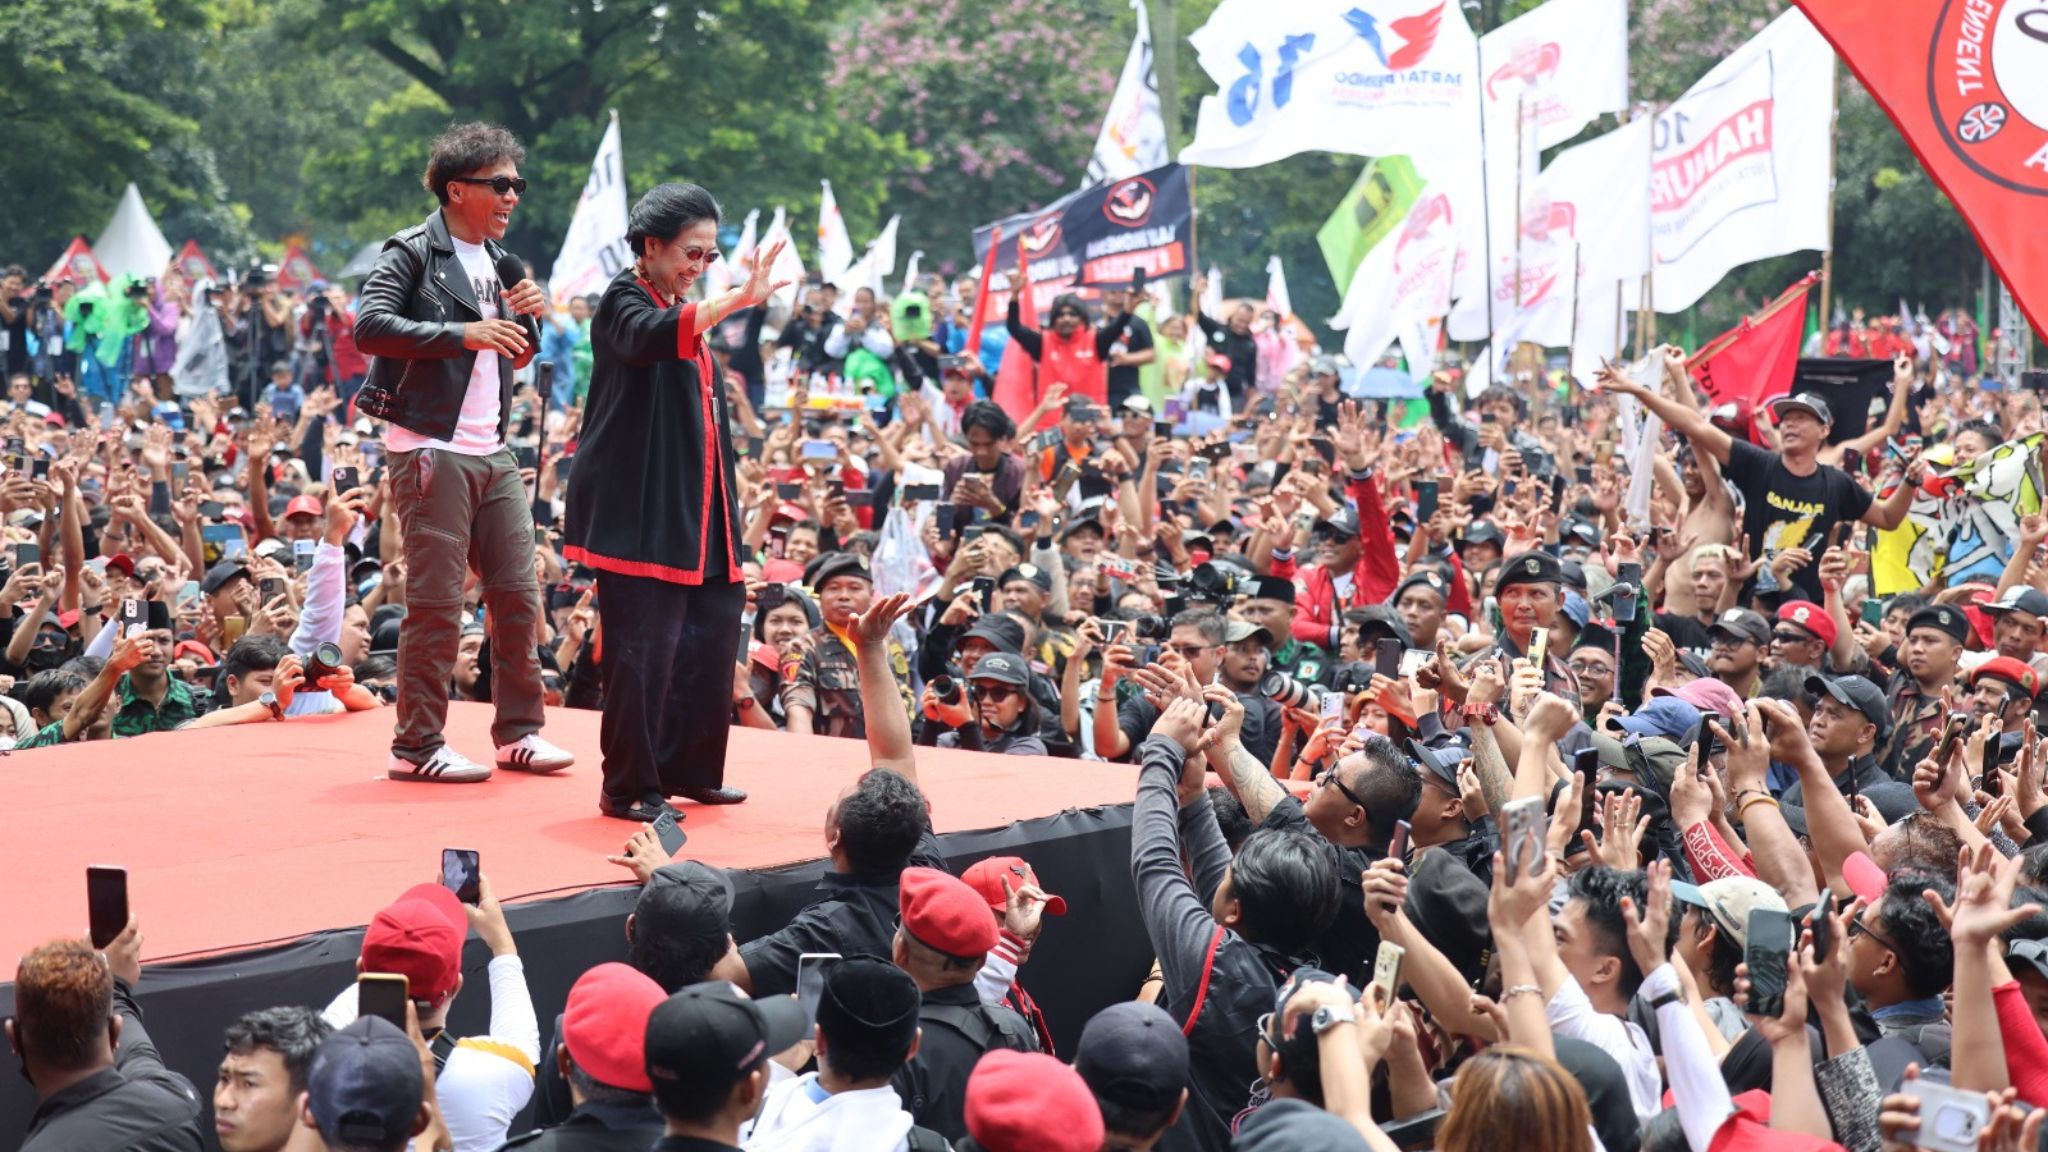 Bikin Kejutan di Hajatan Rakyat Bandung, Kaka Slank Ajak Megawati Joget